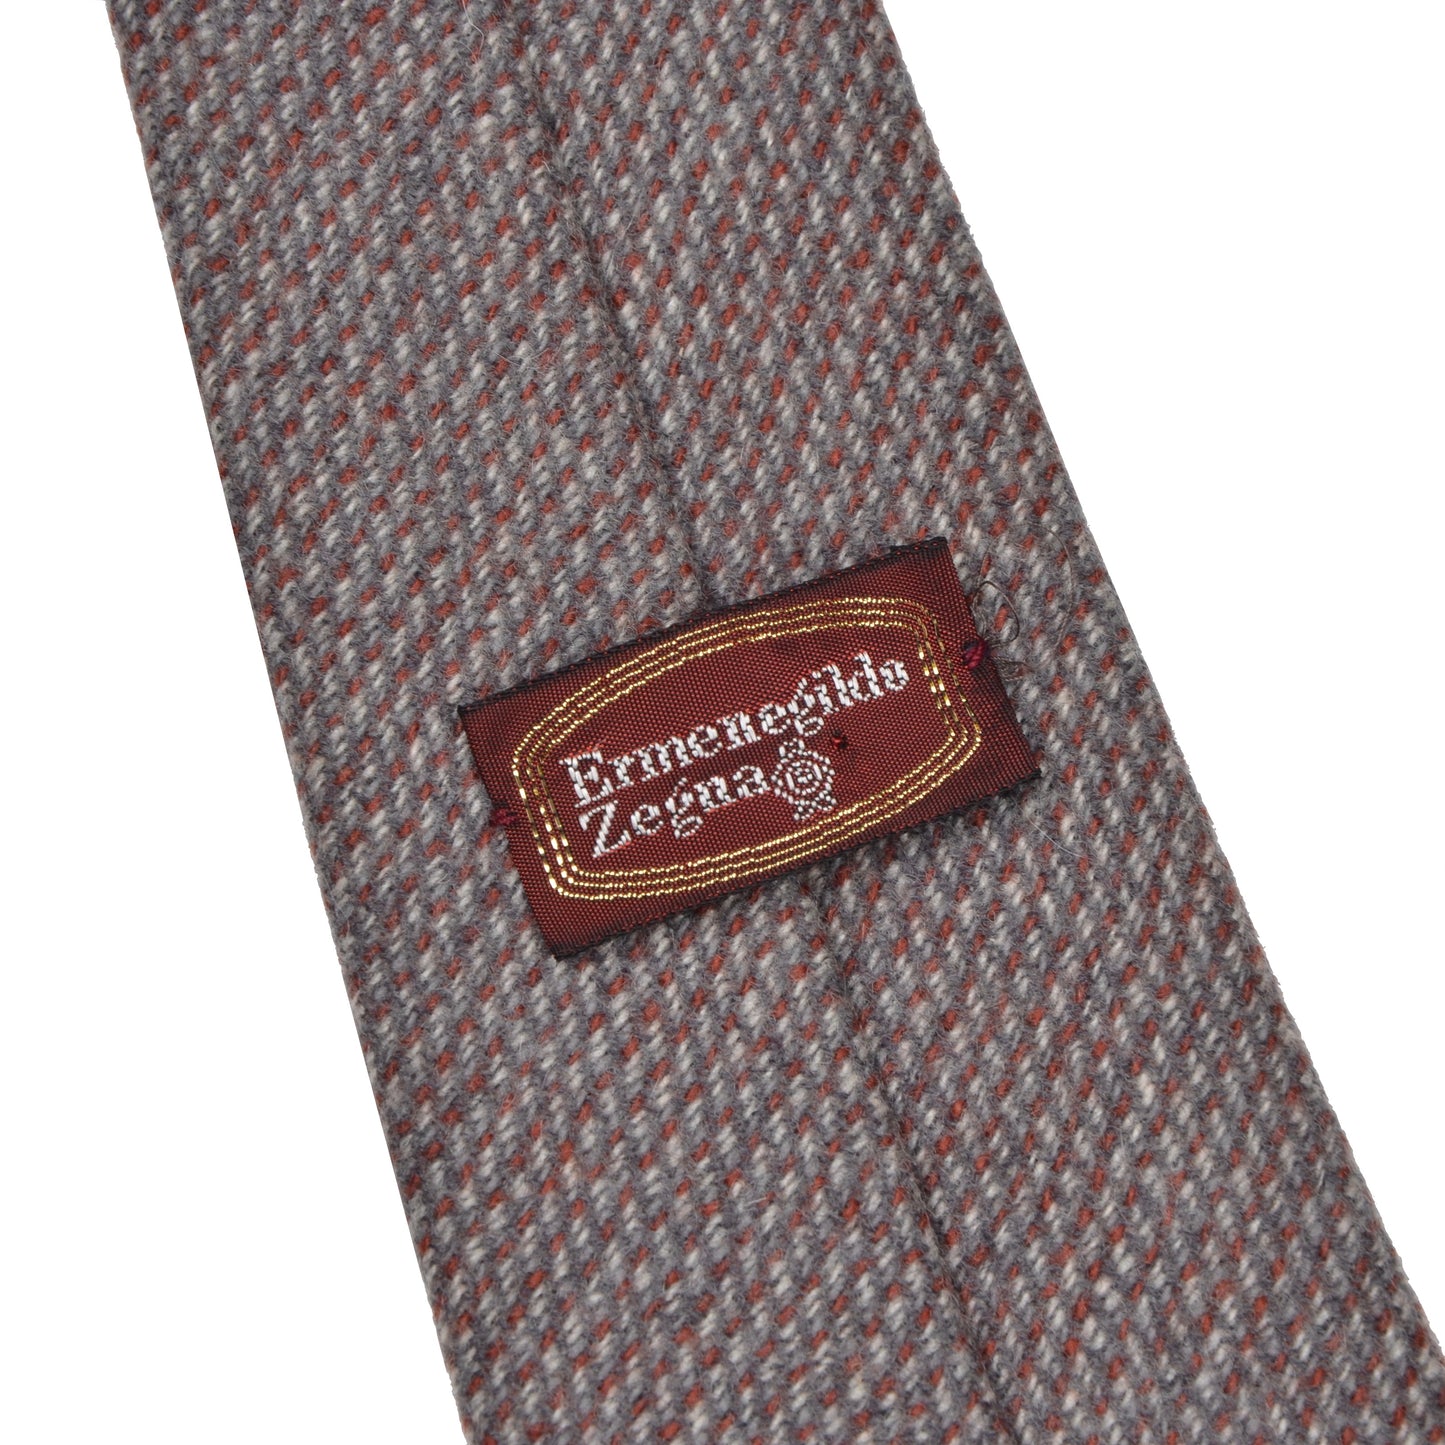 Ermenegildo Zegna Krawatte aus Wolle/Kaschmir - Grau